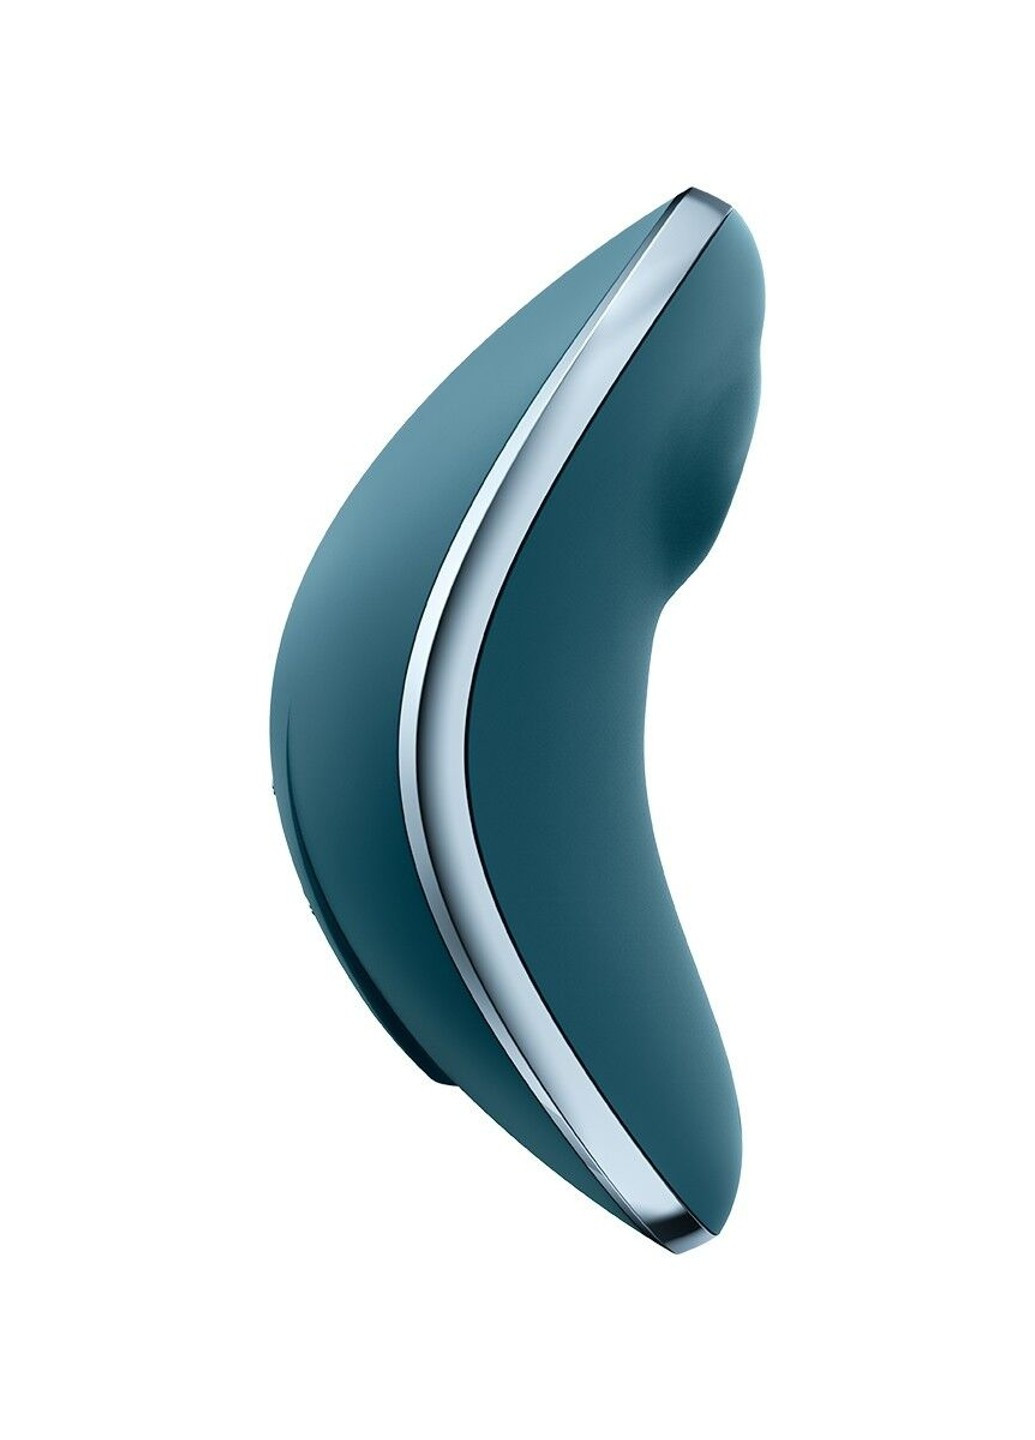 Вакуумный вибратор Vulva Lover 1 Blue Satisfyer (268985562)